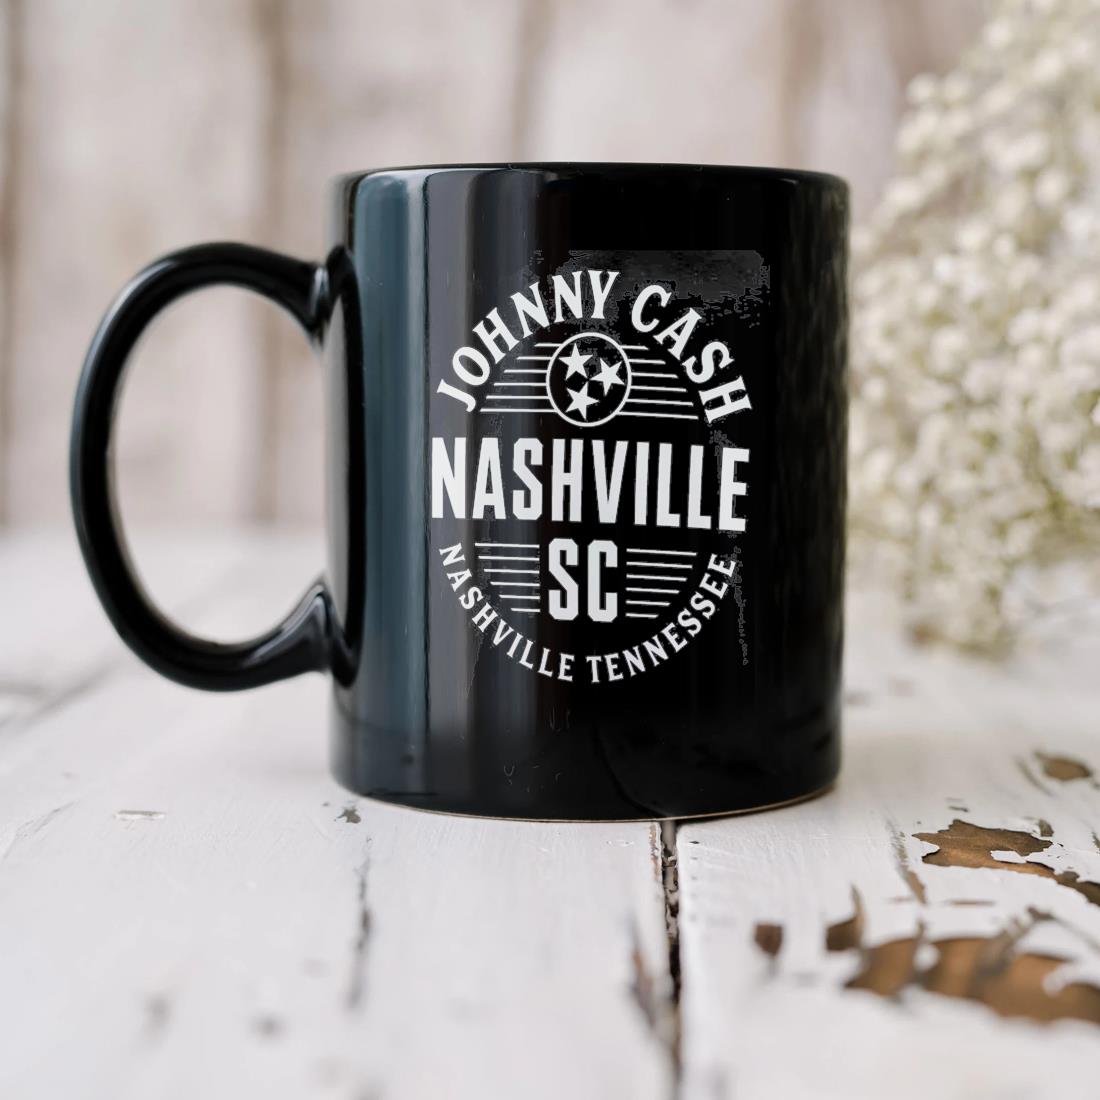 Nashville Sc Johnny Cash Oval Mug